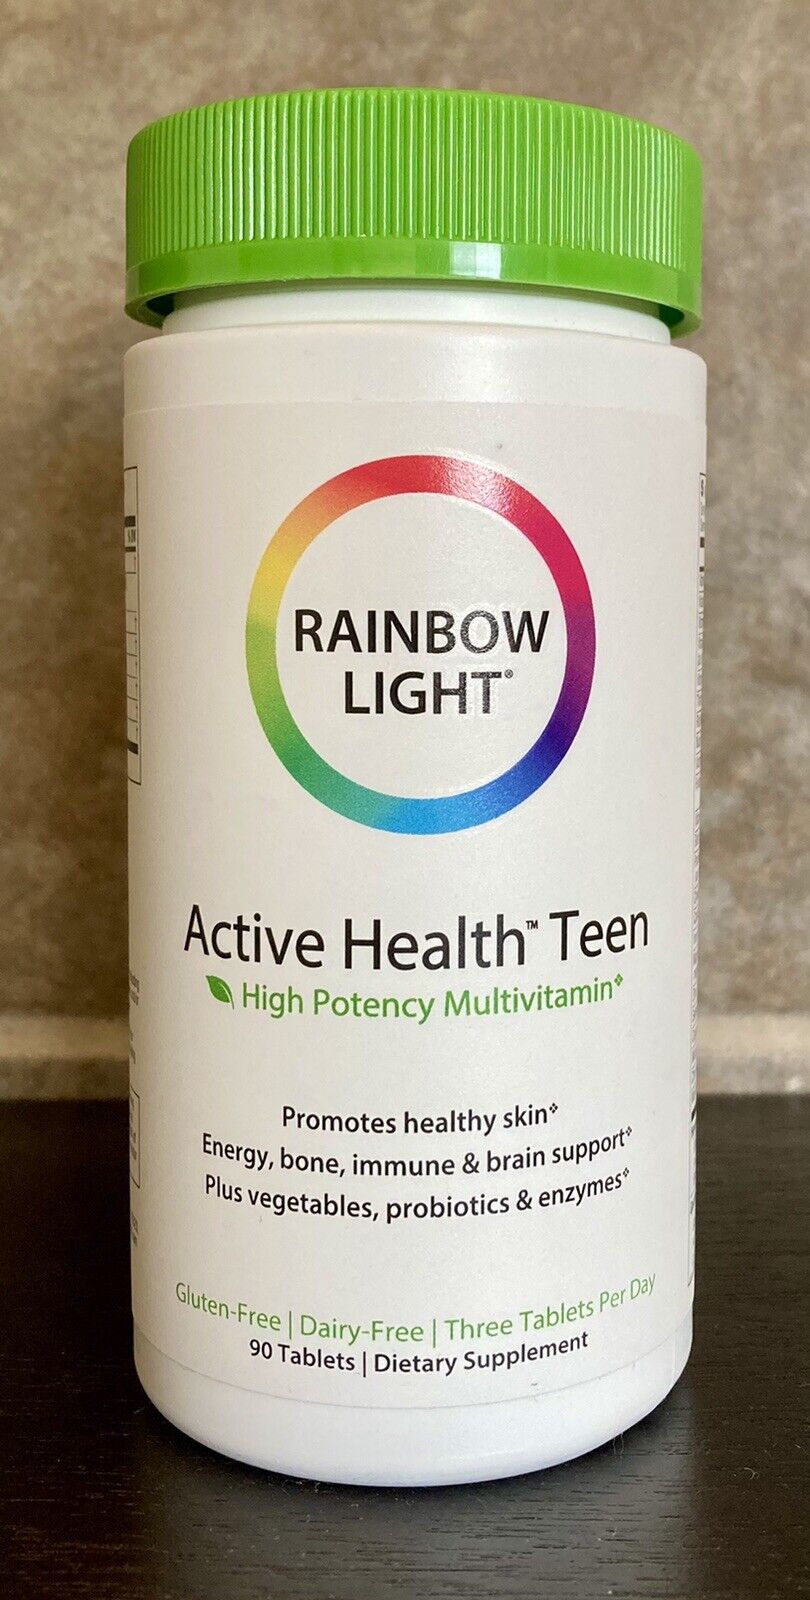 Rainbow Light Active Health Teen 90 Tabs Multivitamin Exp 2/2023 Skin Energy